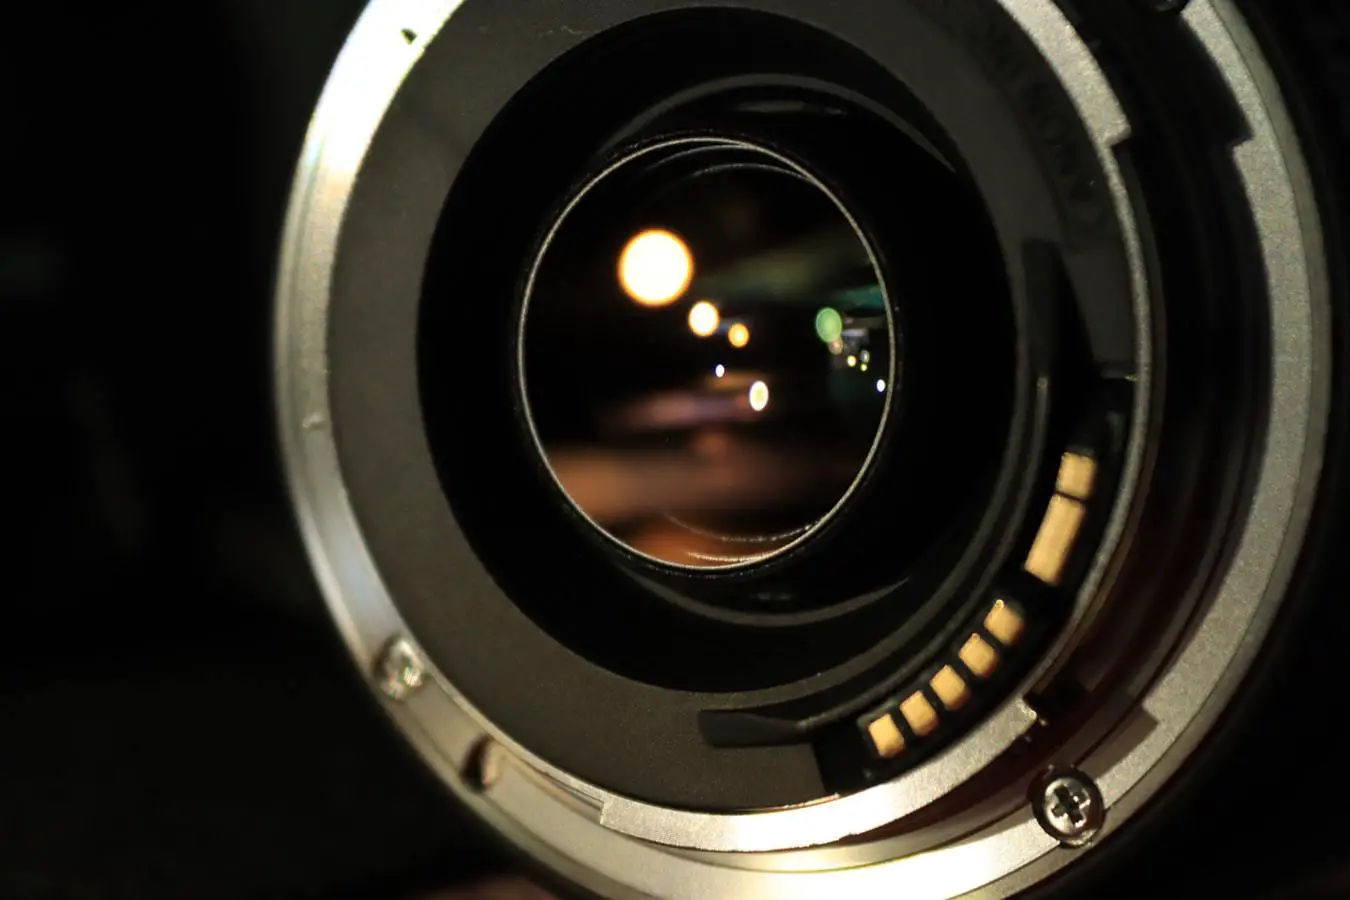 Macro shot aperture inside the camera lens